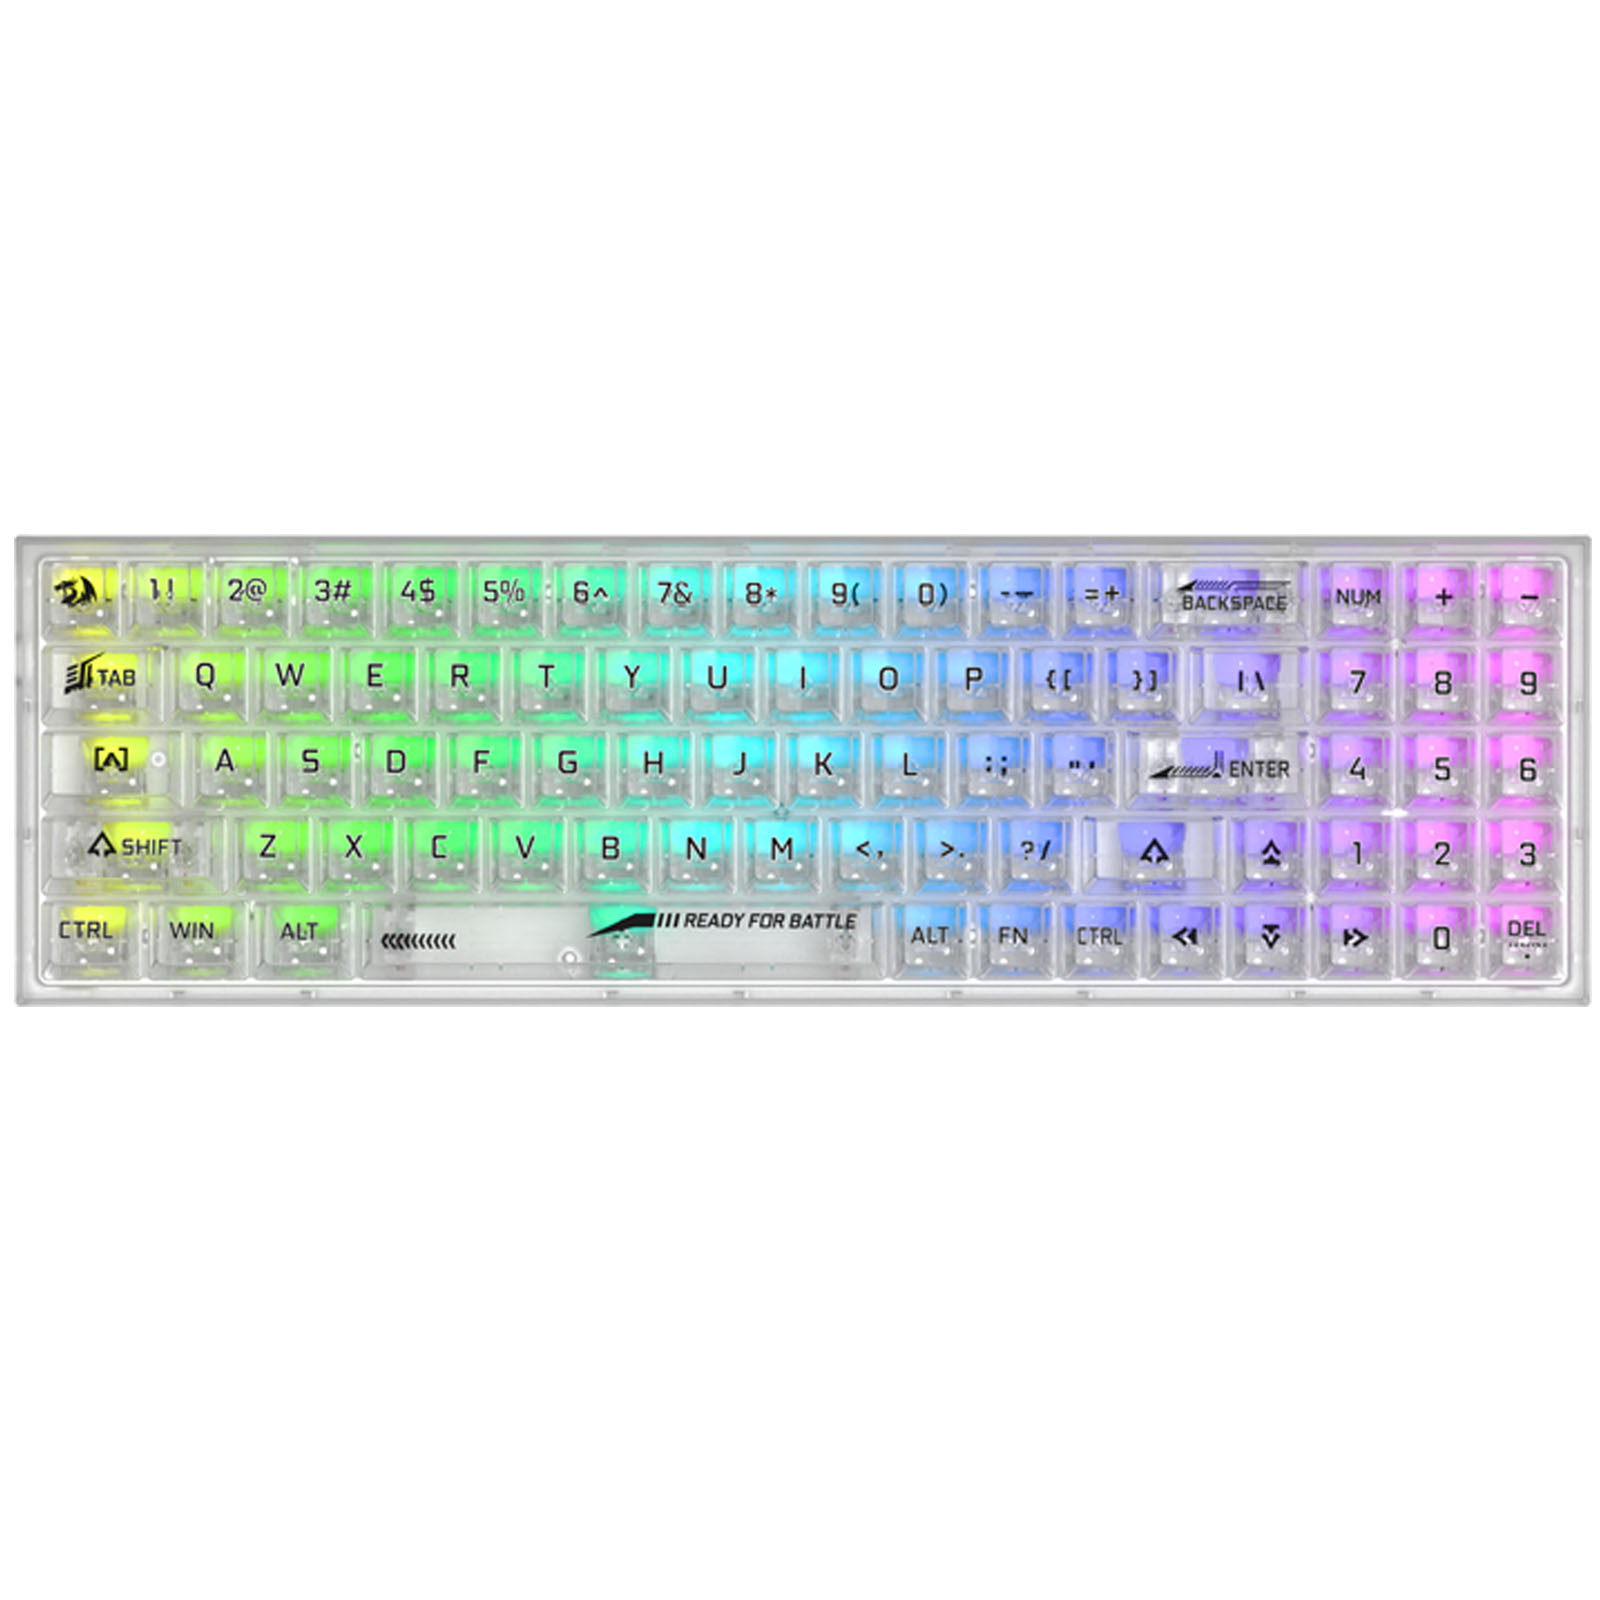 Redragon K628 PRO SE 75% 3-Mode Wireless RGB Gaming Keyboard, 78 Keys Full-Transparent Hot-Swap Compact Mechanical Keyboard, Full White Transparent